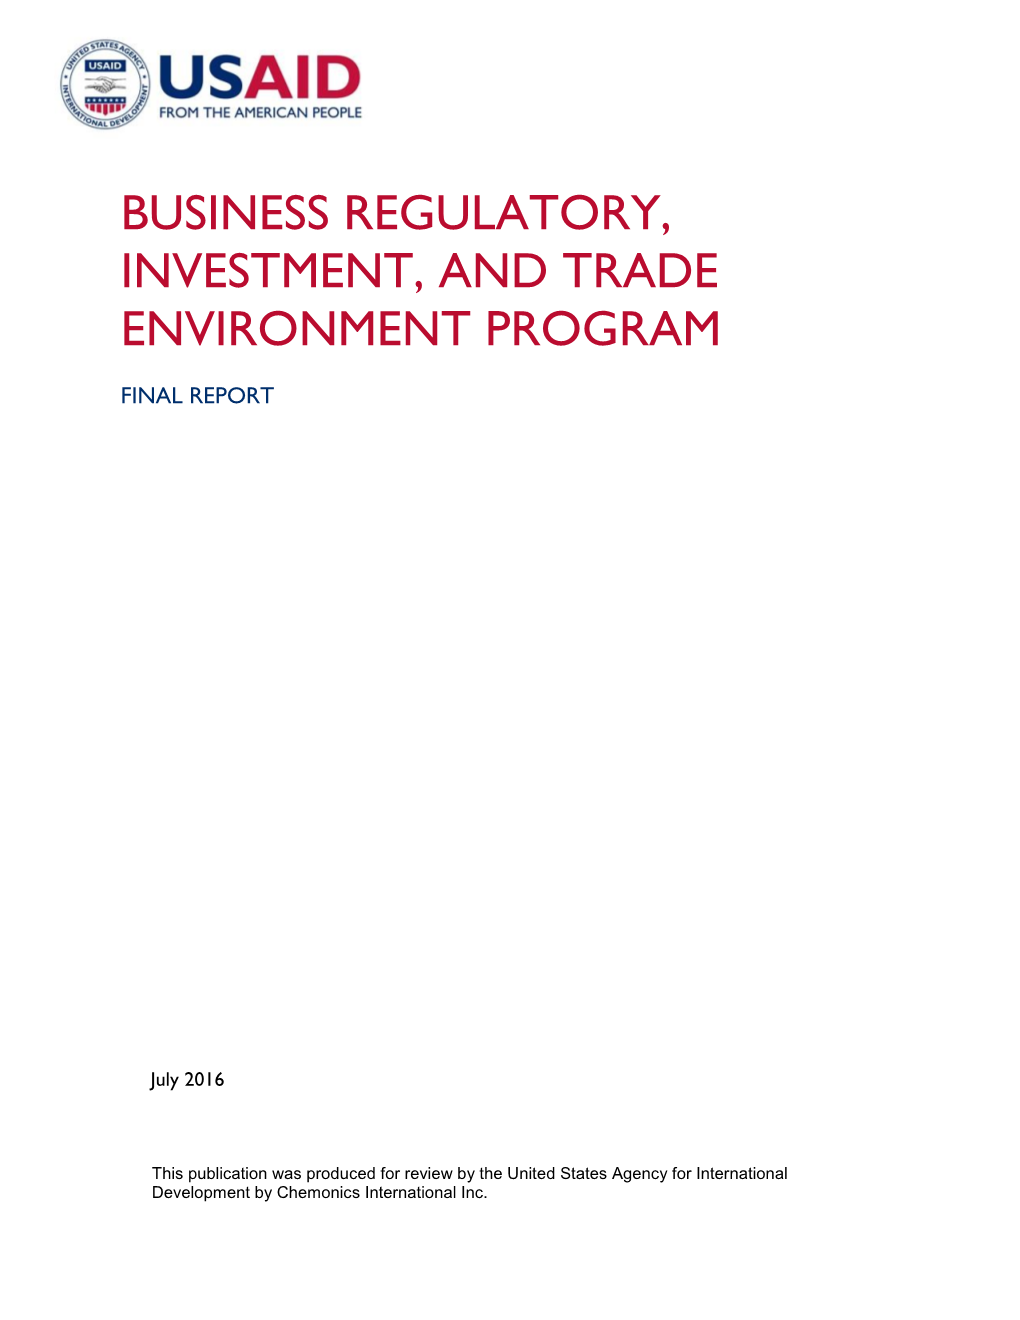 USAID Business Regulatory, Investment, and Trade Environment Program